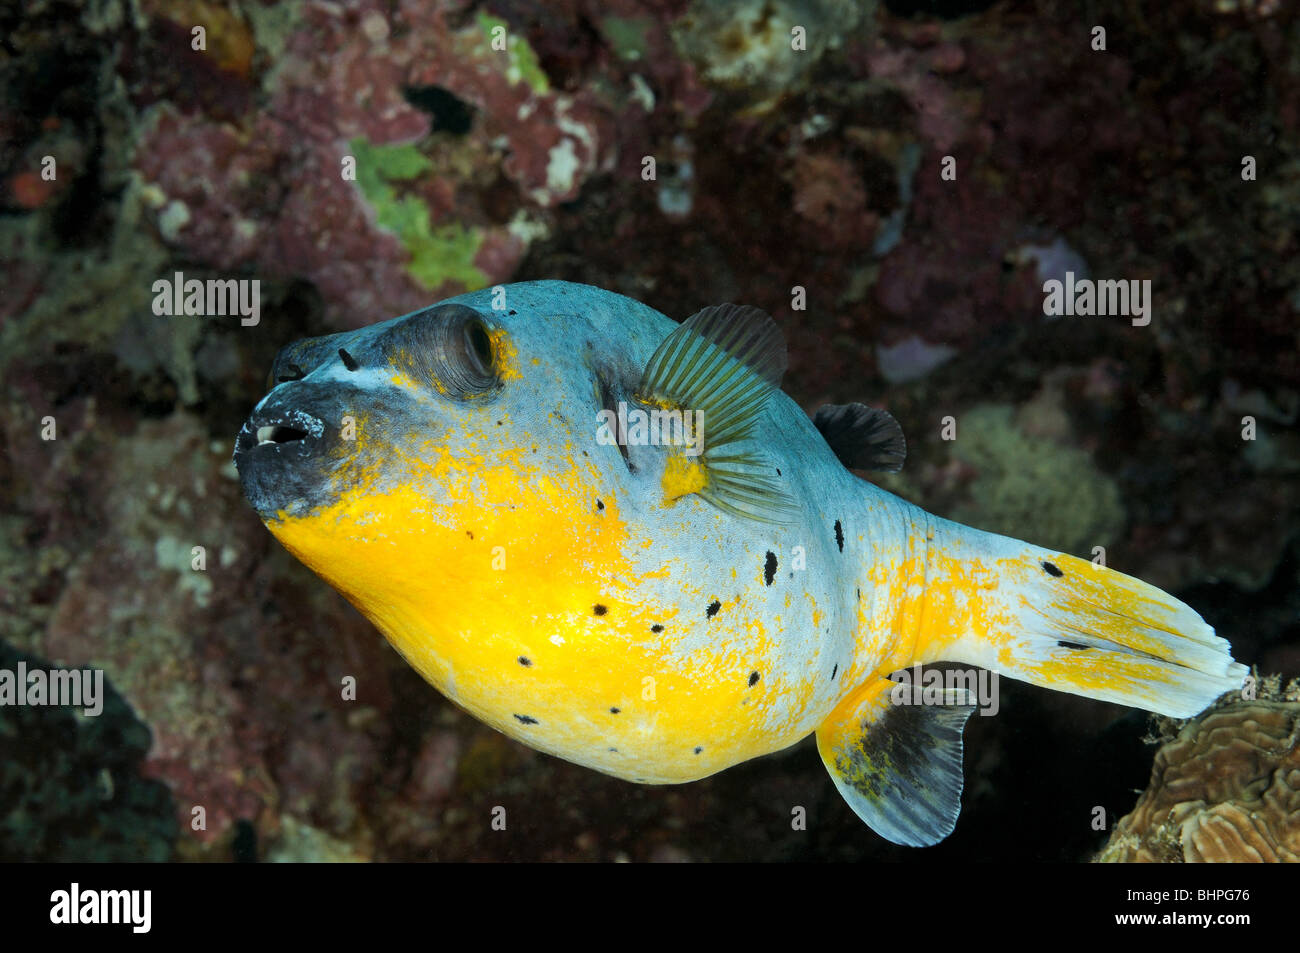 Arothron nigropunctatus, Blackspotted Pufferfish, Bali, Indonesia, Indo-Pacific Ocean Stock Photo